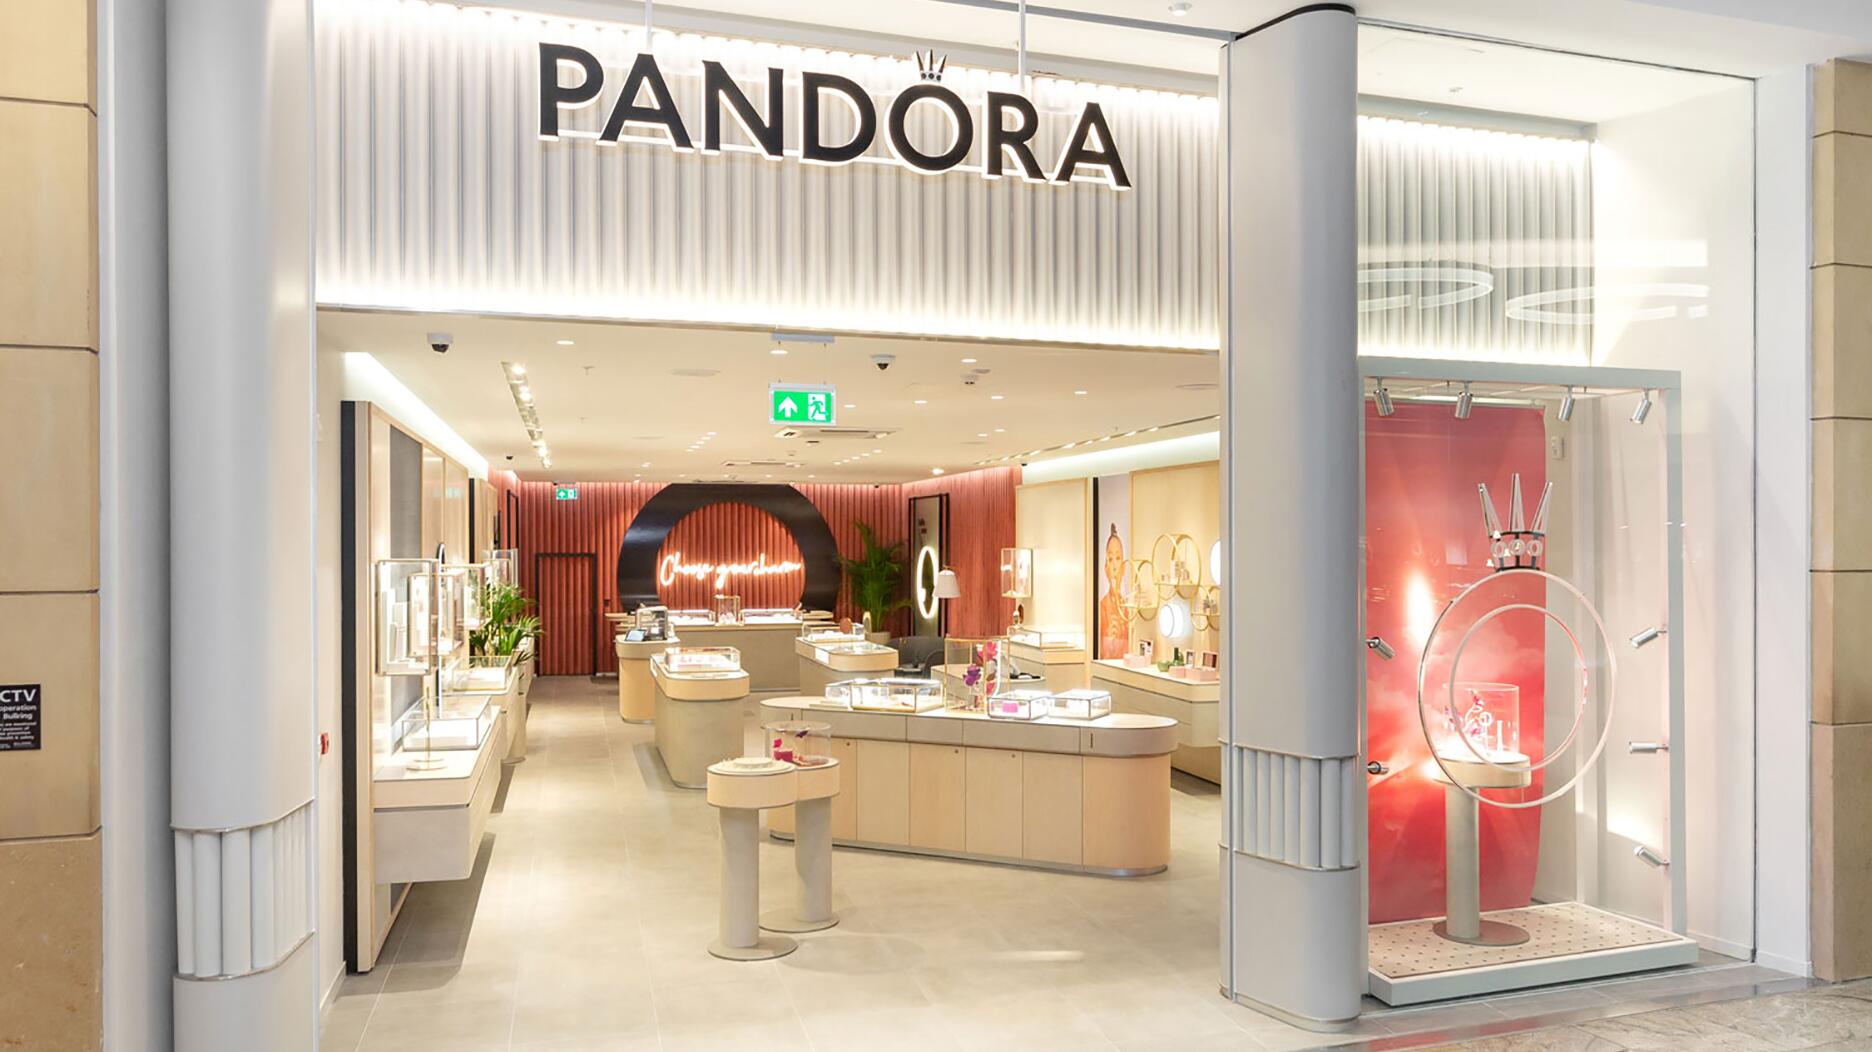 Pandora Puts Money Where Its Mouth Is Via Sustainability Bonds